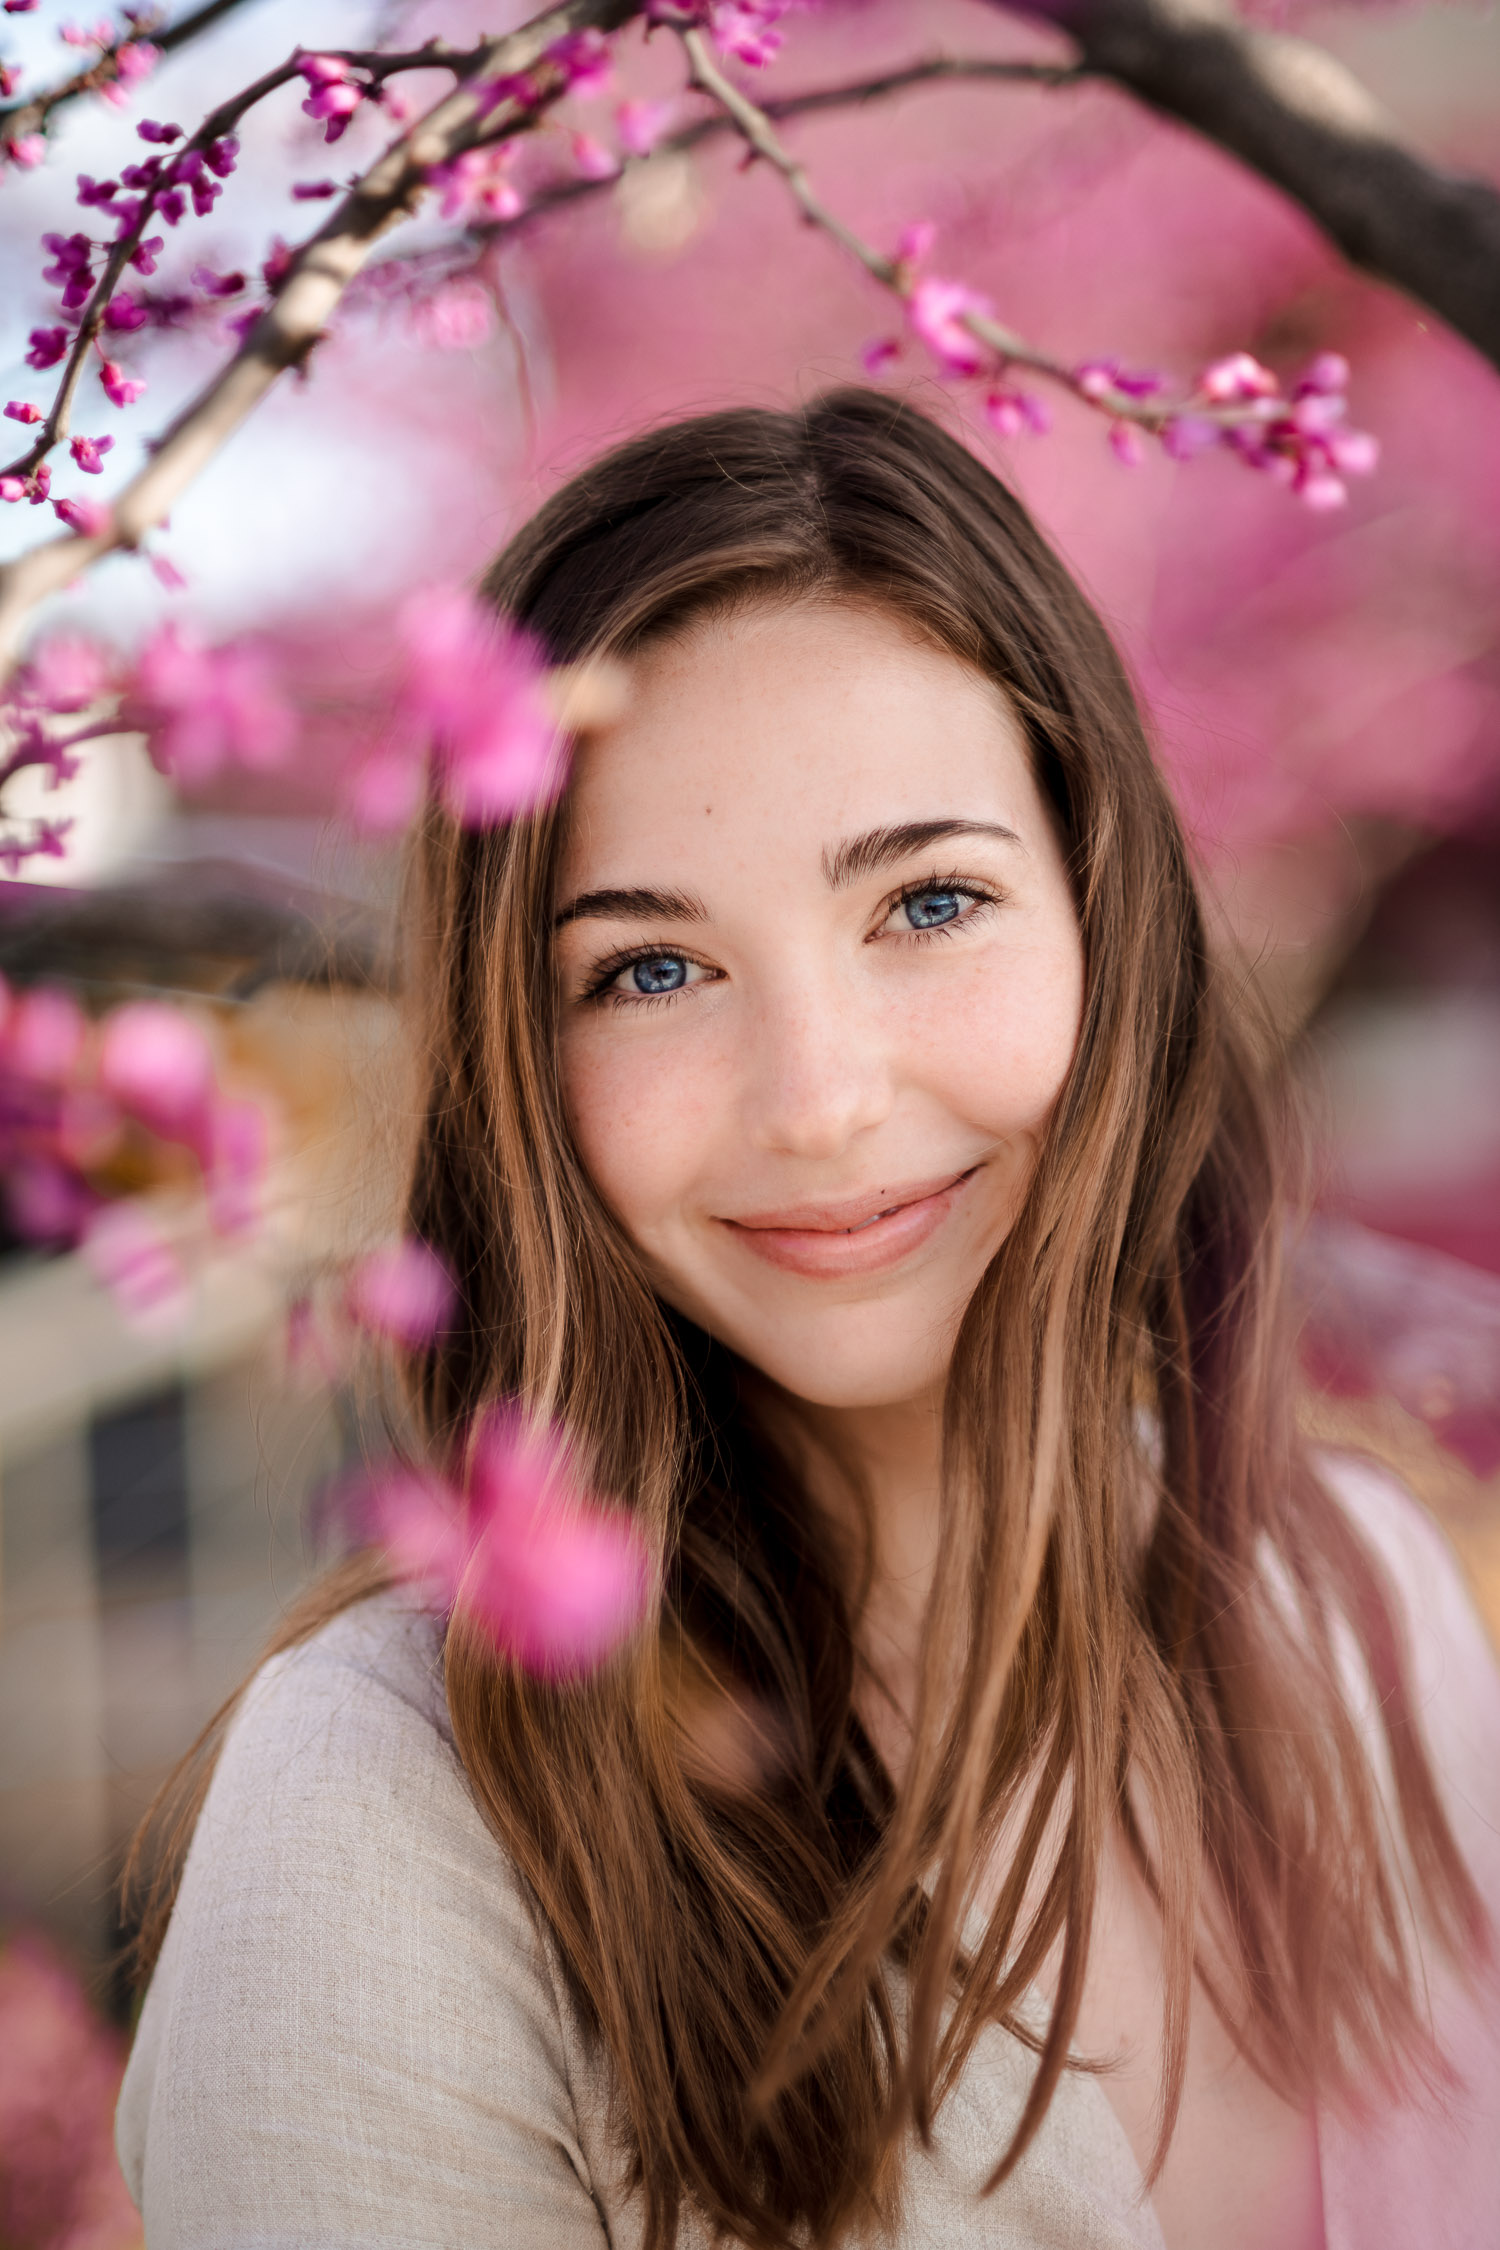 Senior portrait girl smiling with pink Redbud flowers